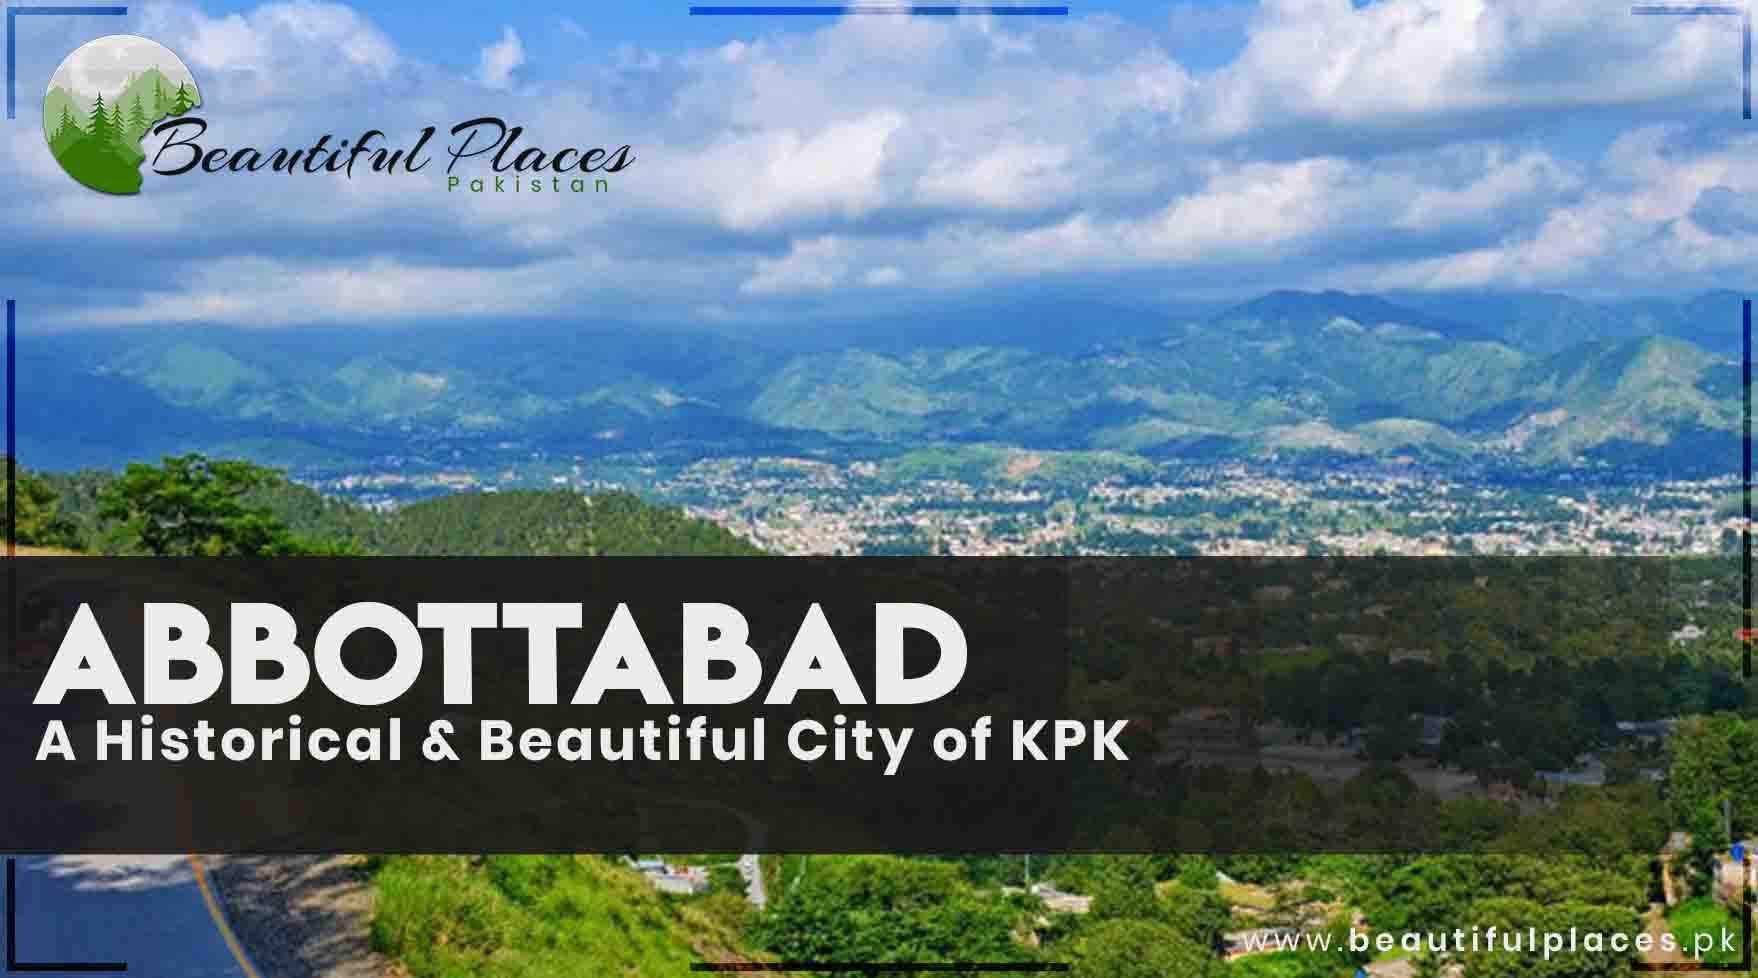 Abbottabad - A Historical & Beautiful City of KPK